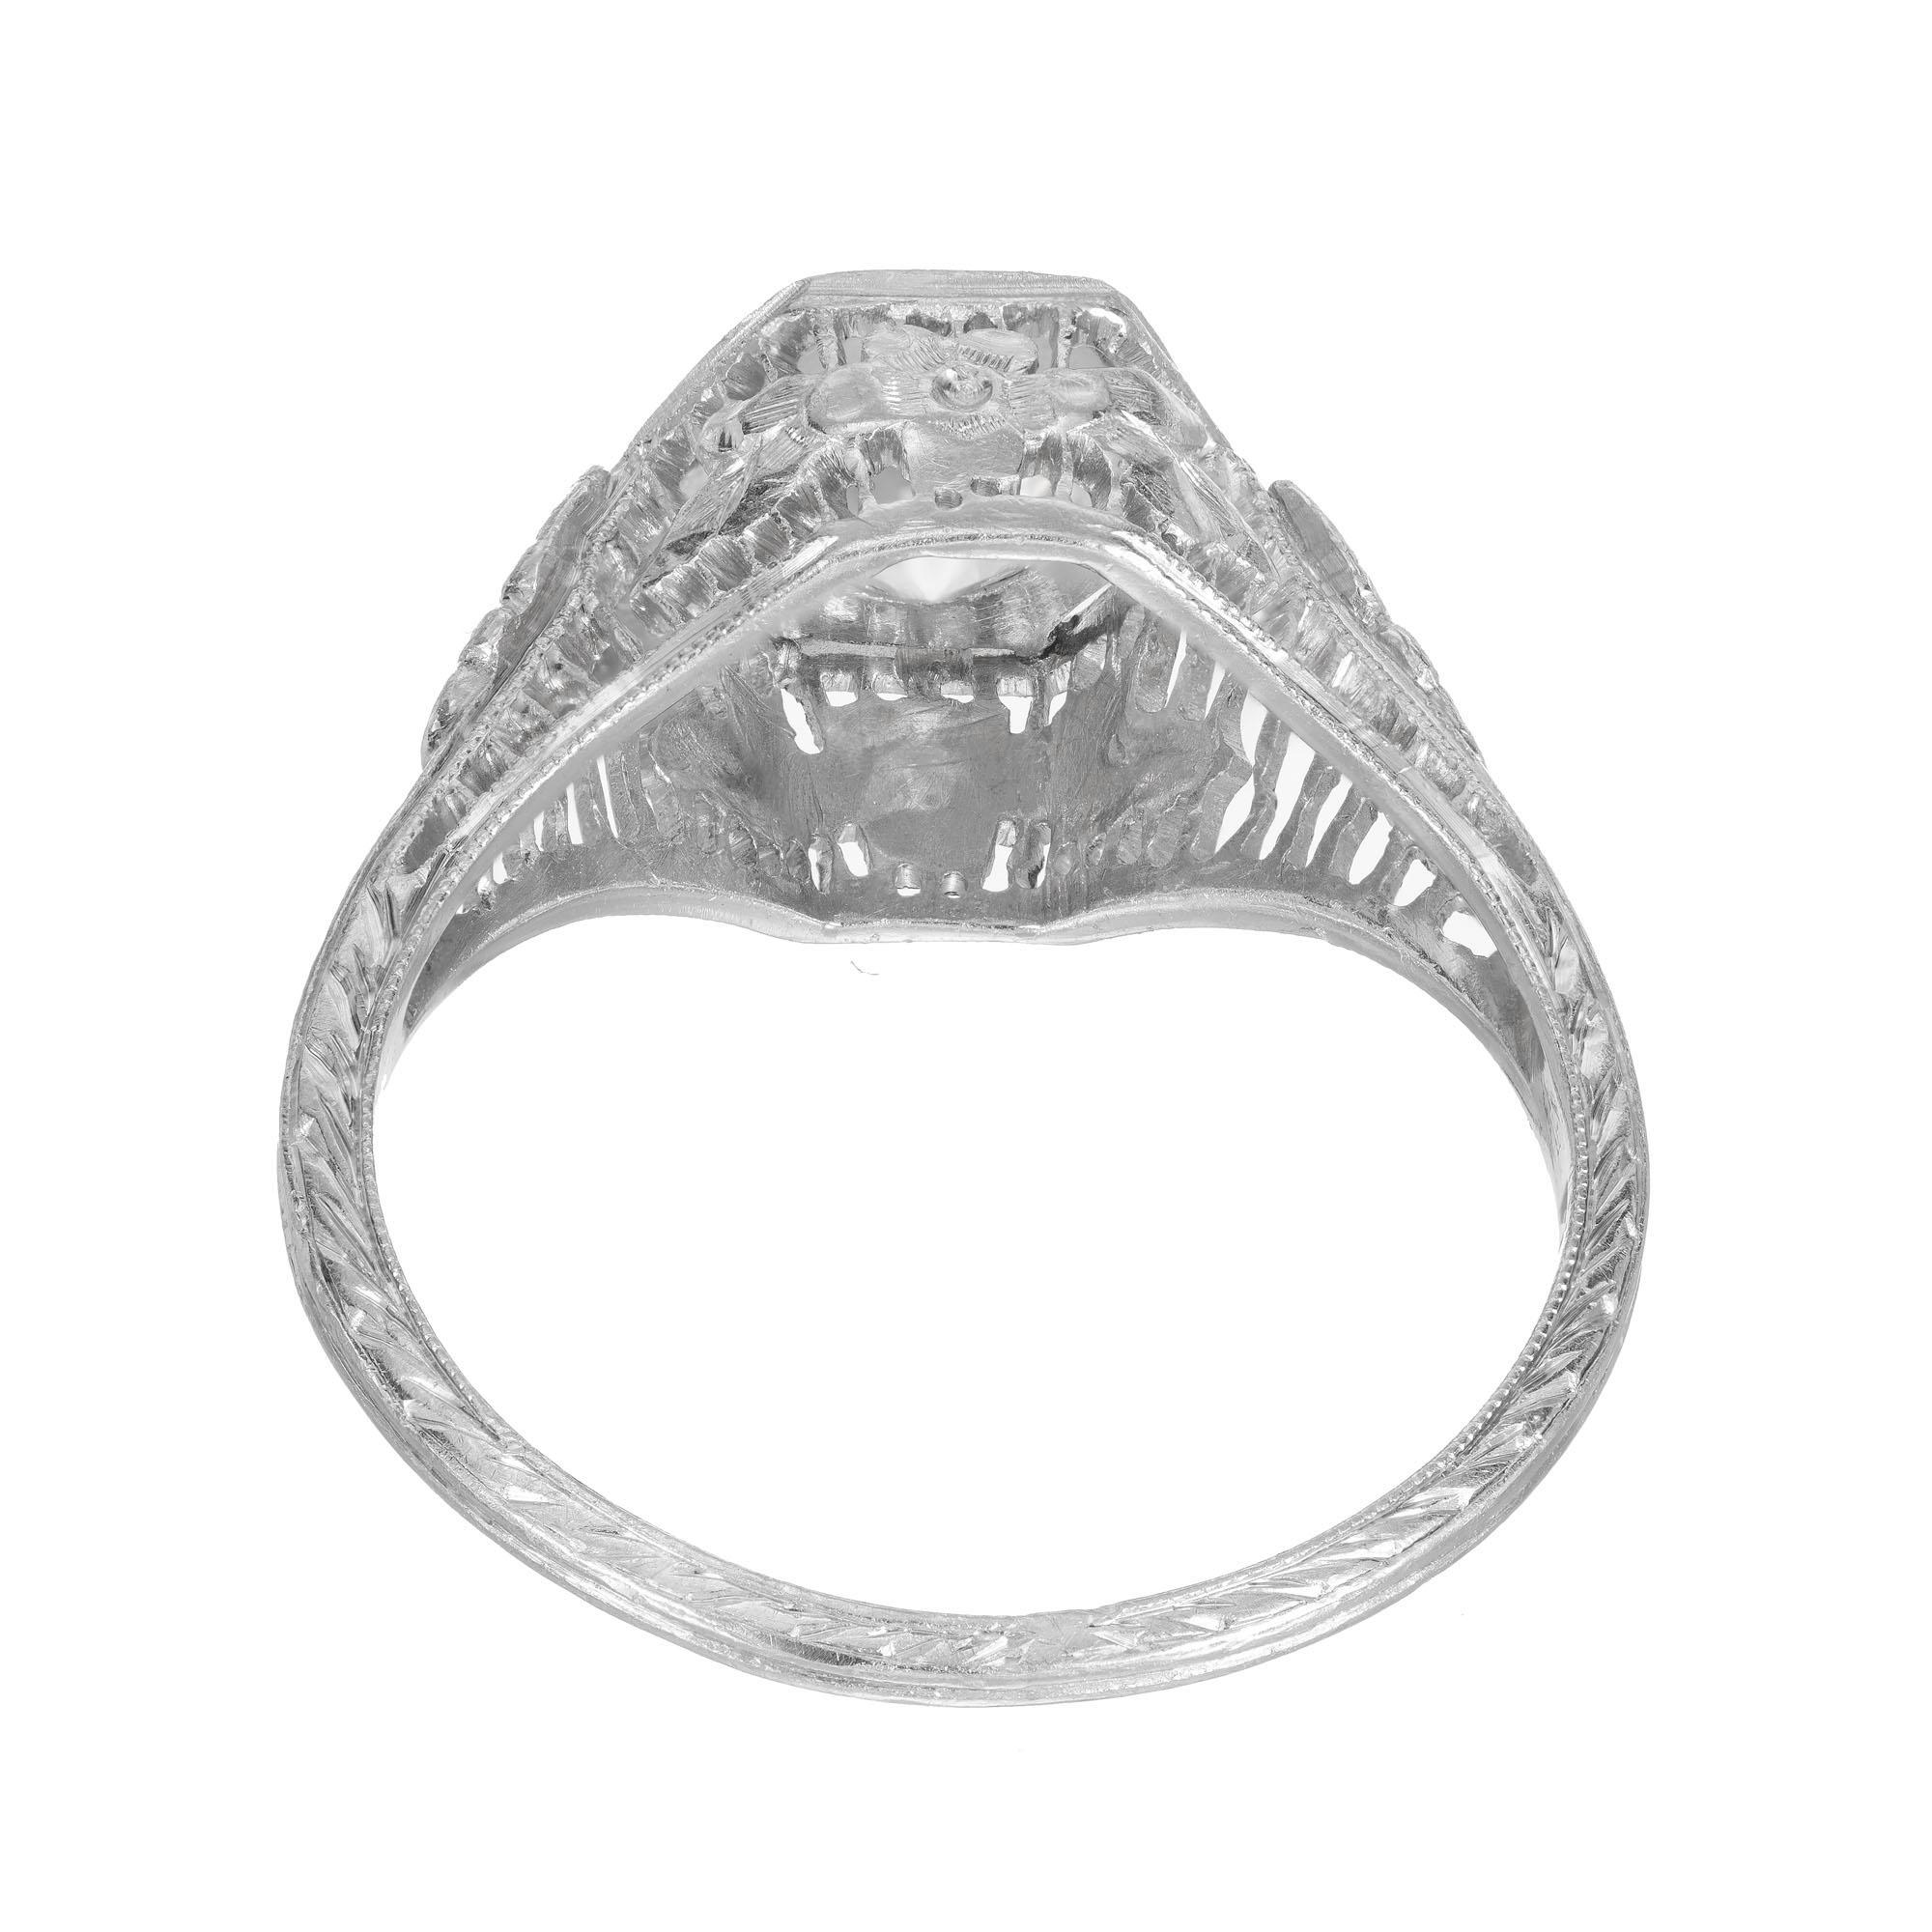 52 carat diamond ring